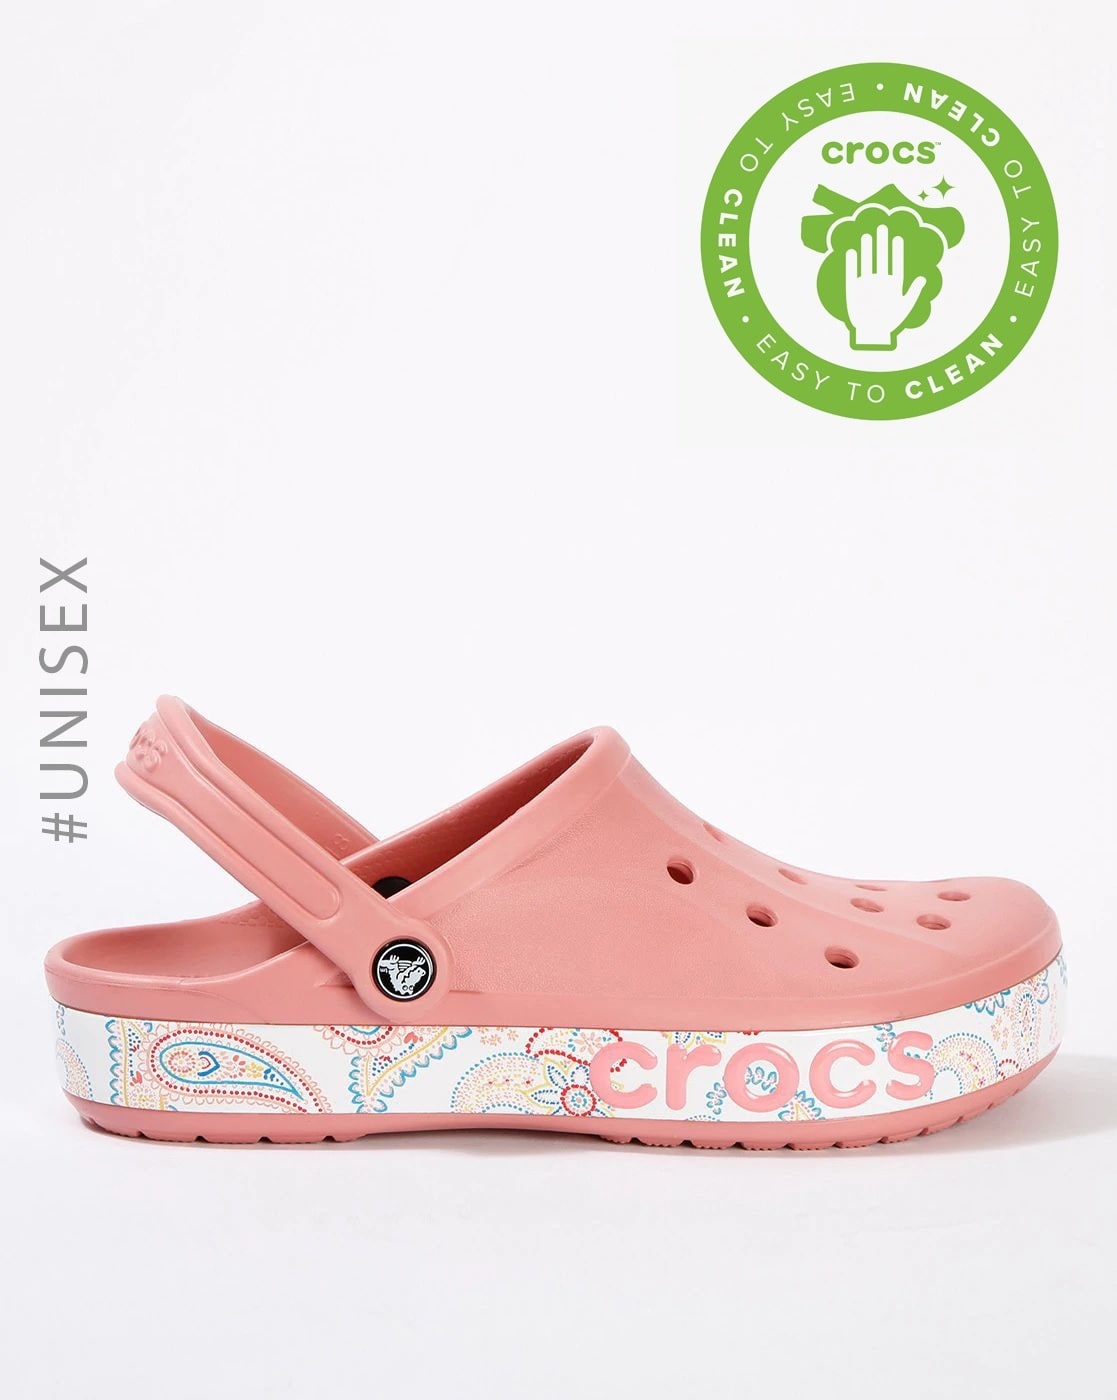 purchase crocs online